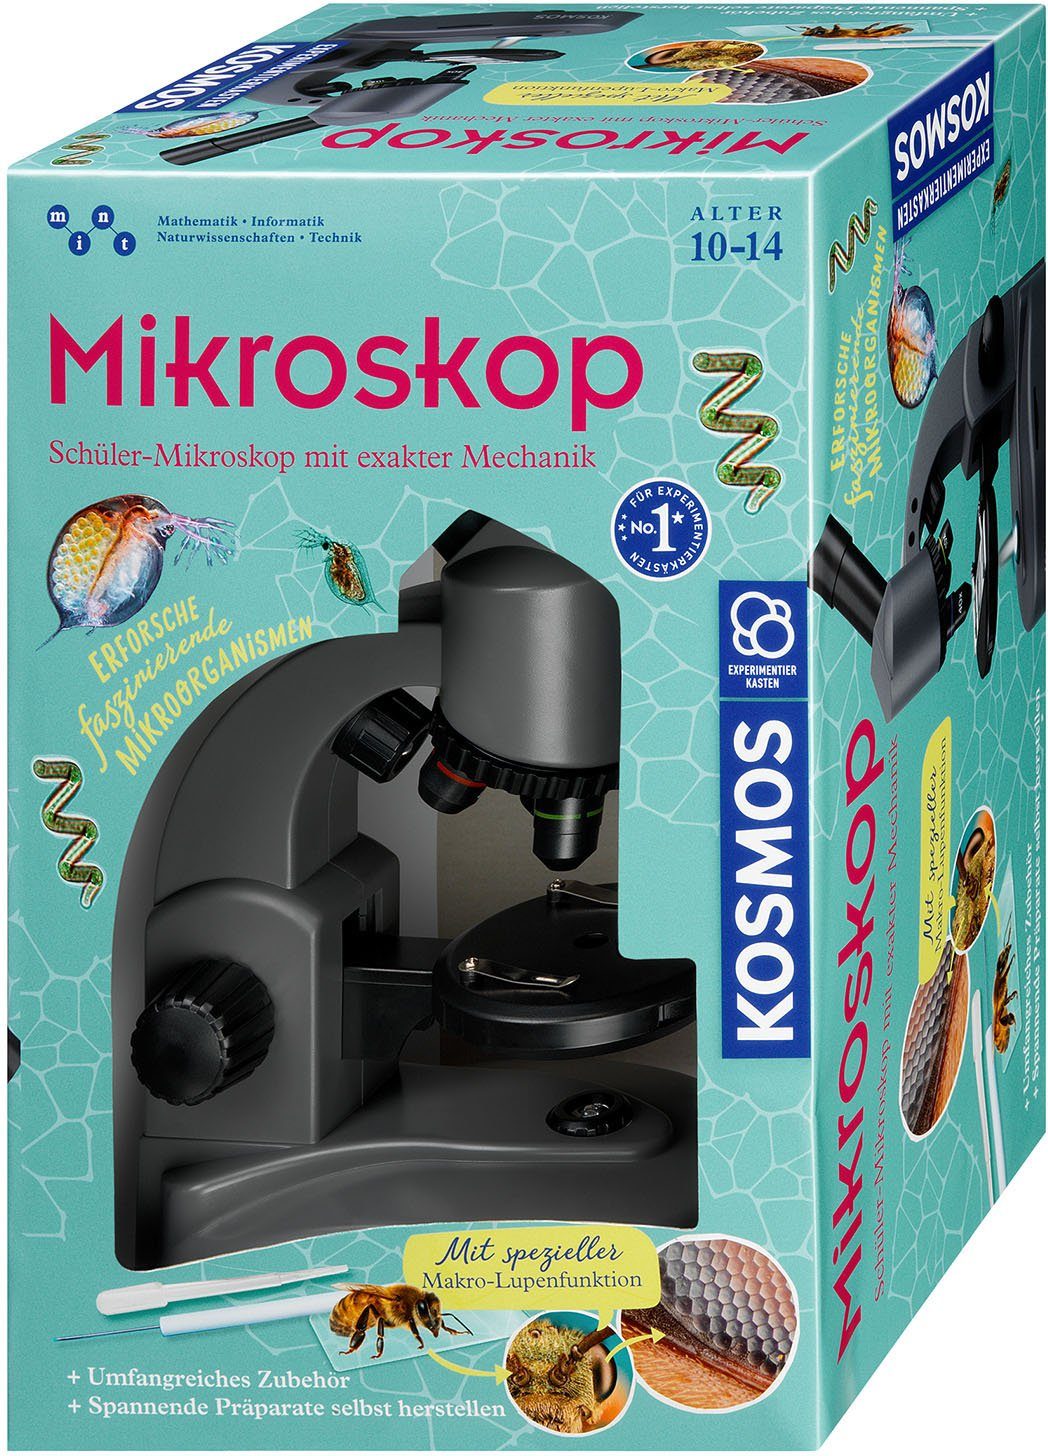 Kosmos Kindermikroskop (1x-400x), Schüler-Mikroskop mit exakter Mechanik  online kaufen | OTTO